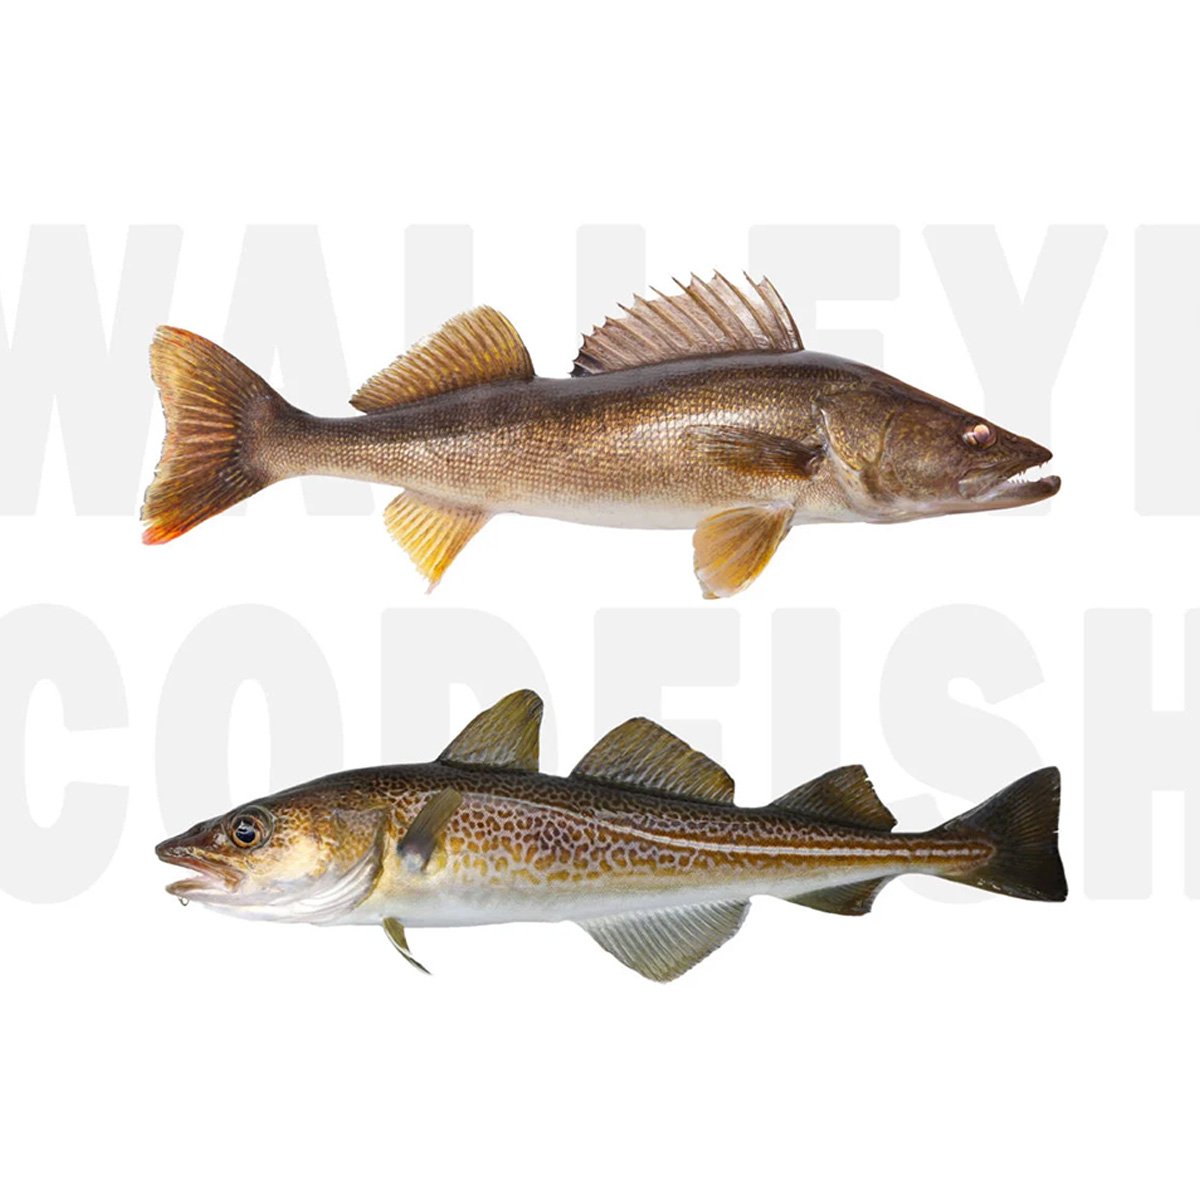 walleye versus codfish thumbnail